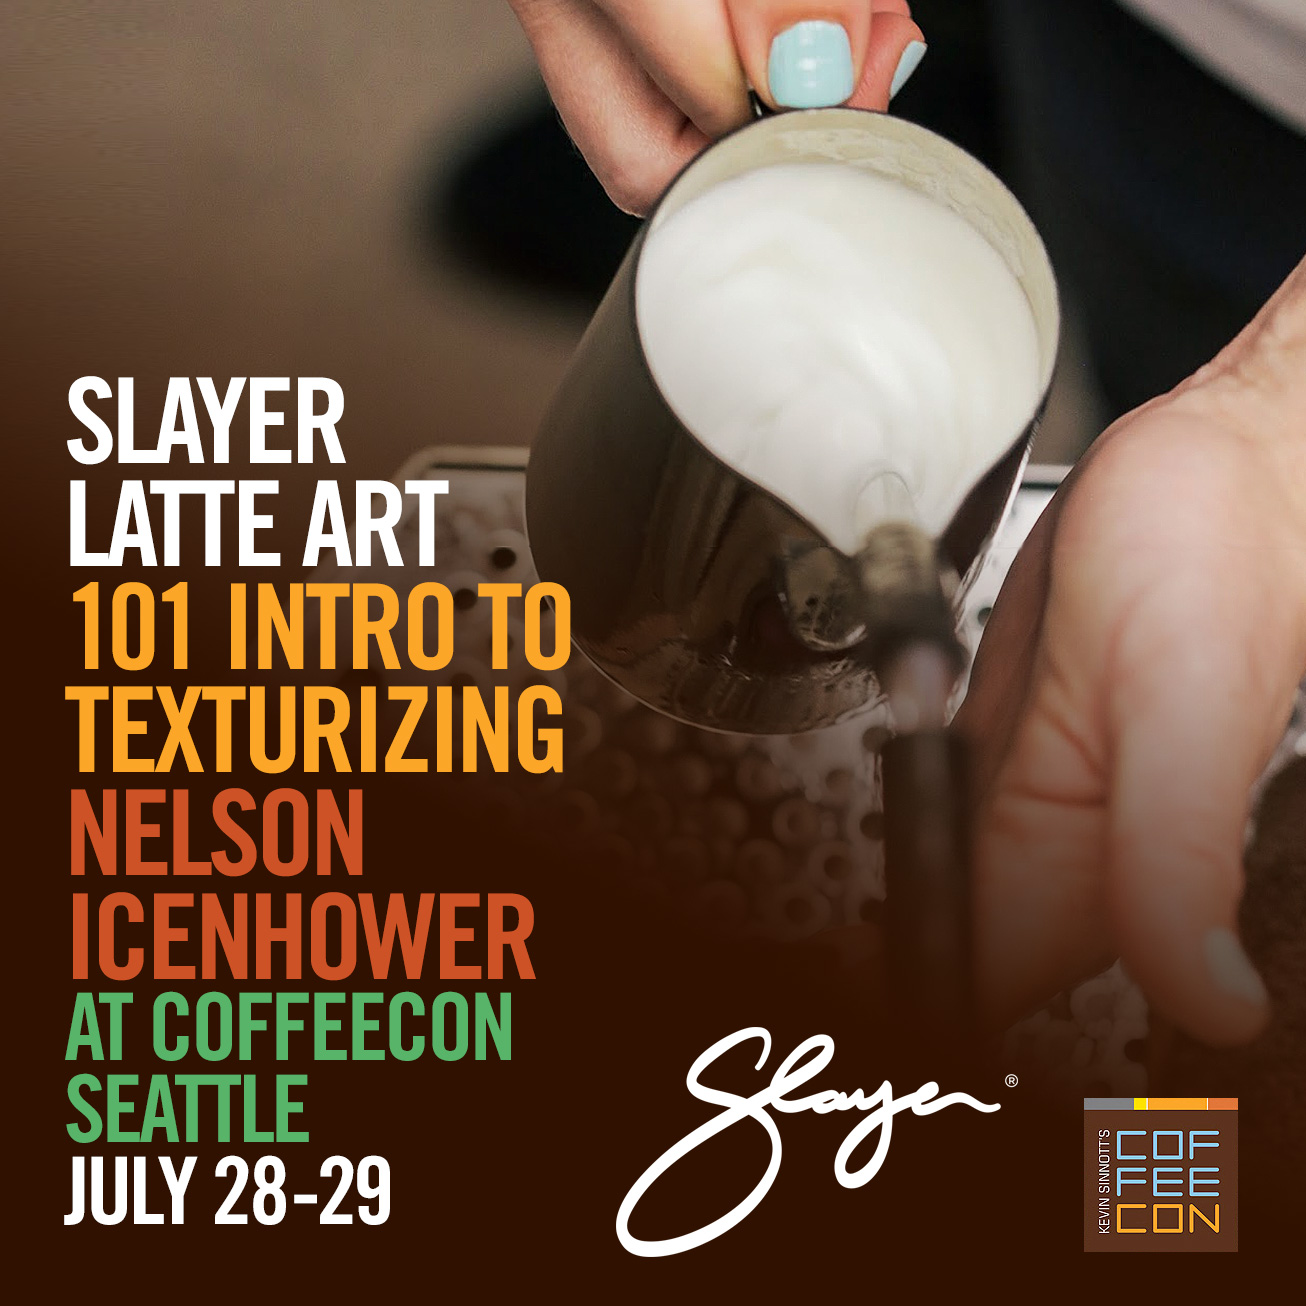 Slayer Latte Art 101 Intro to Texturizing